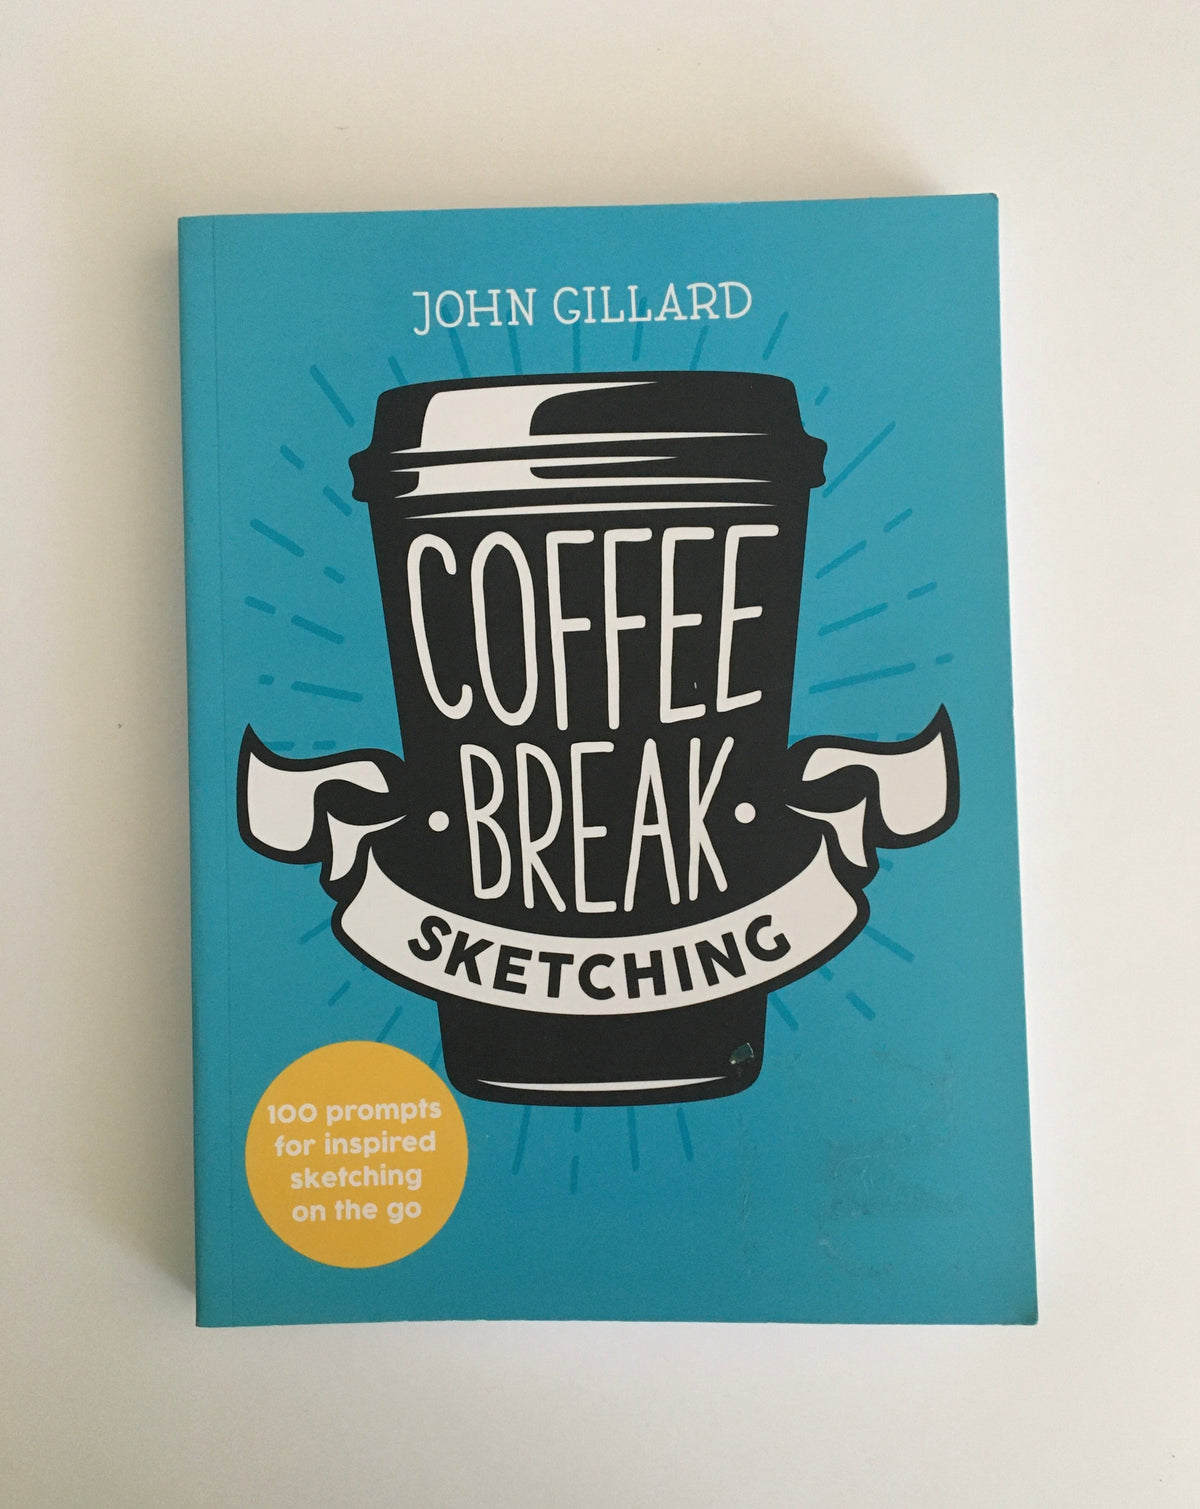 Coffee Break Sketching by John Gillard